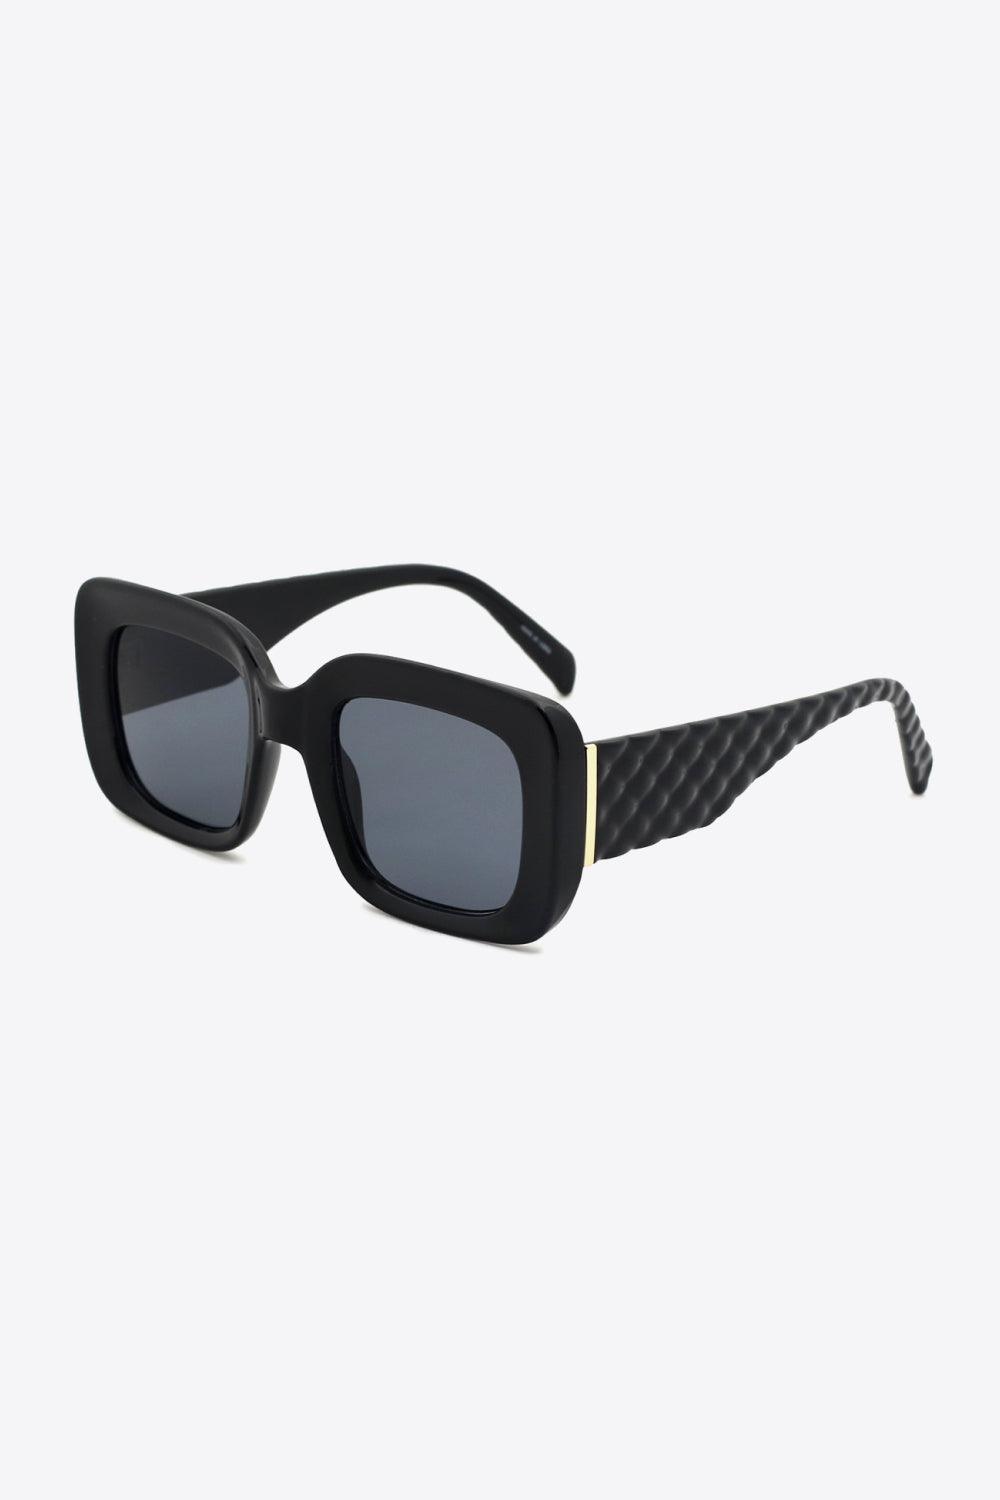 Shield My Eyes Square Polycarbonate Sunglasses - MXSTUDIO.COM